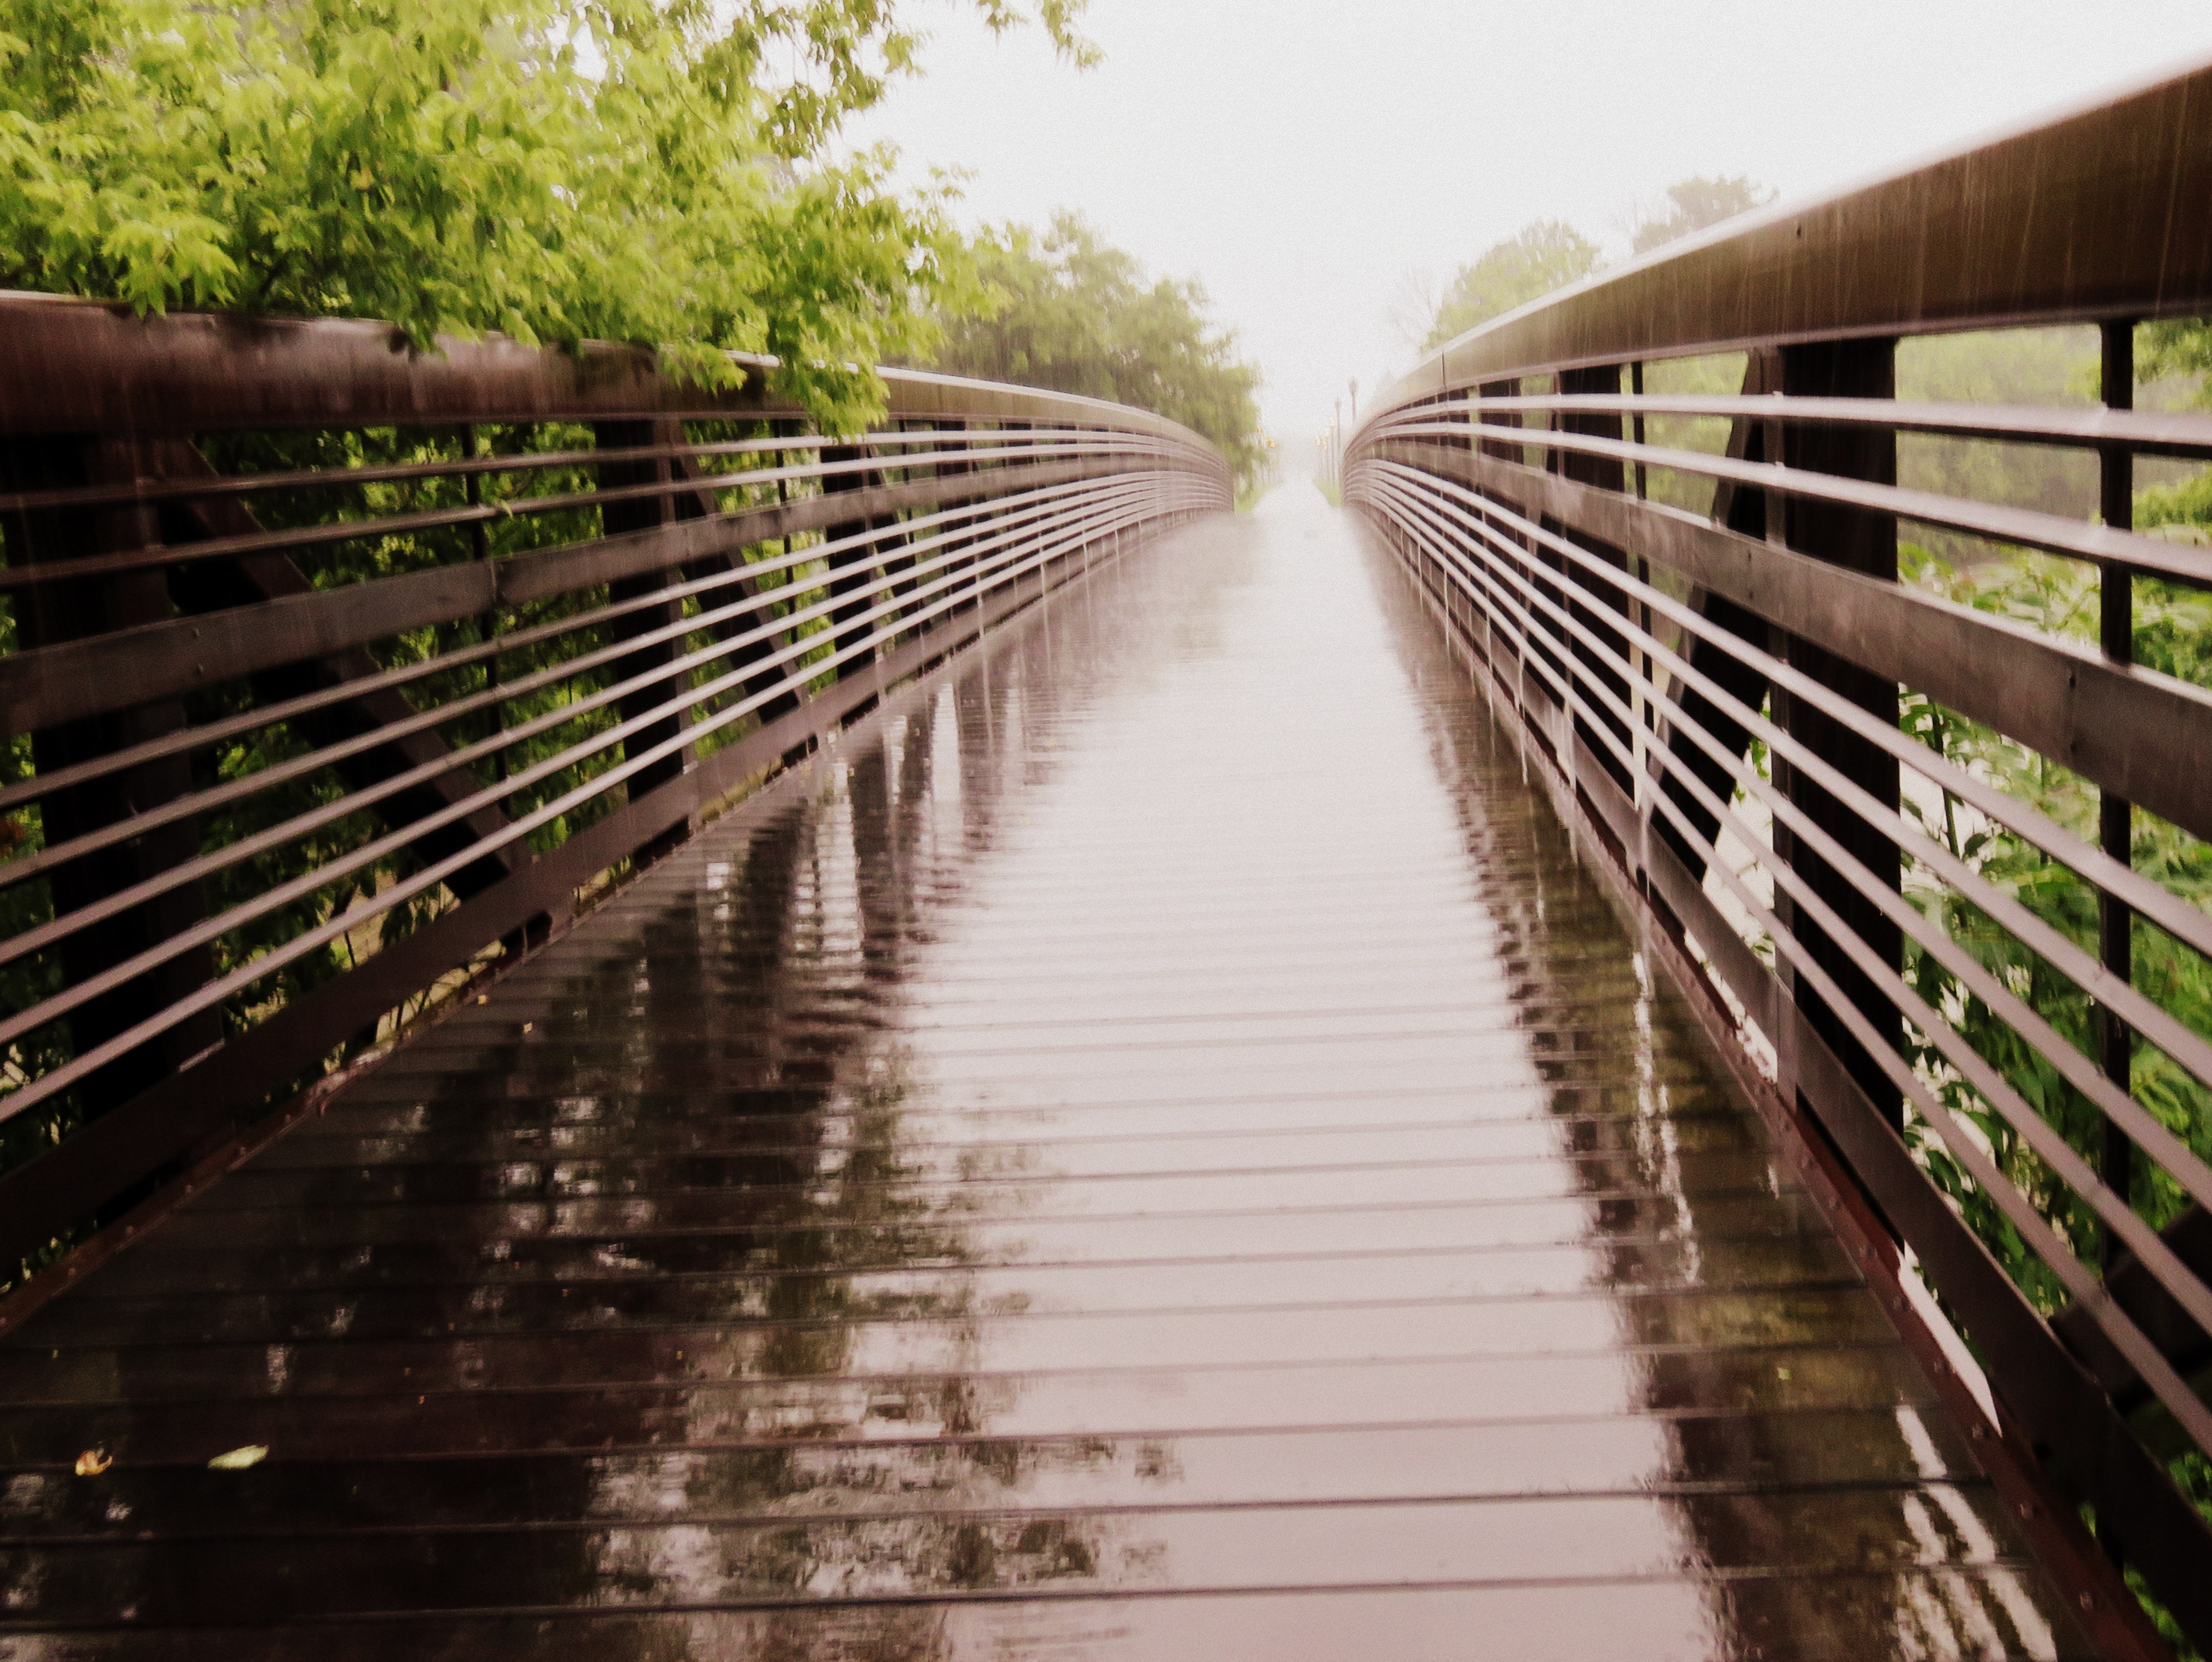 A walking bridge shiny after a rain